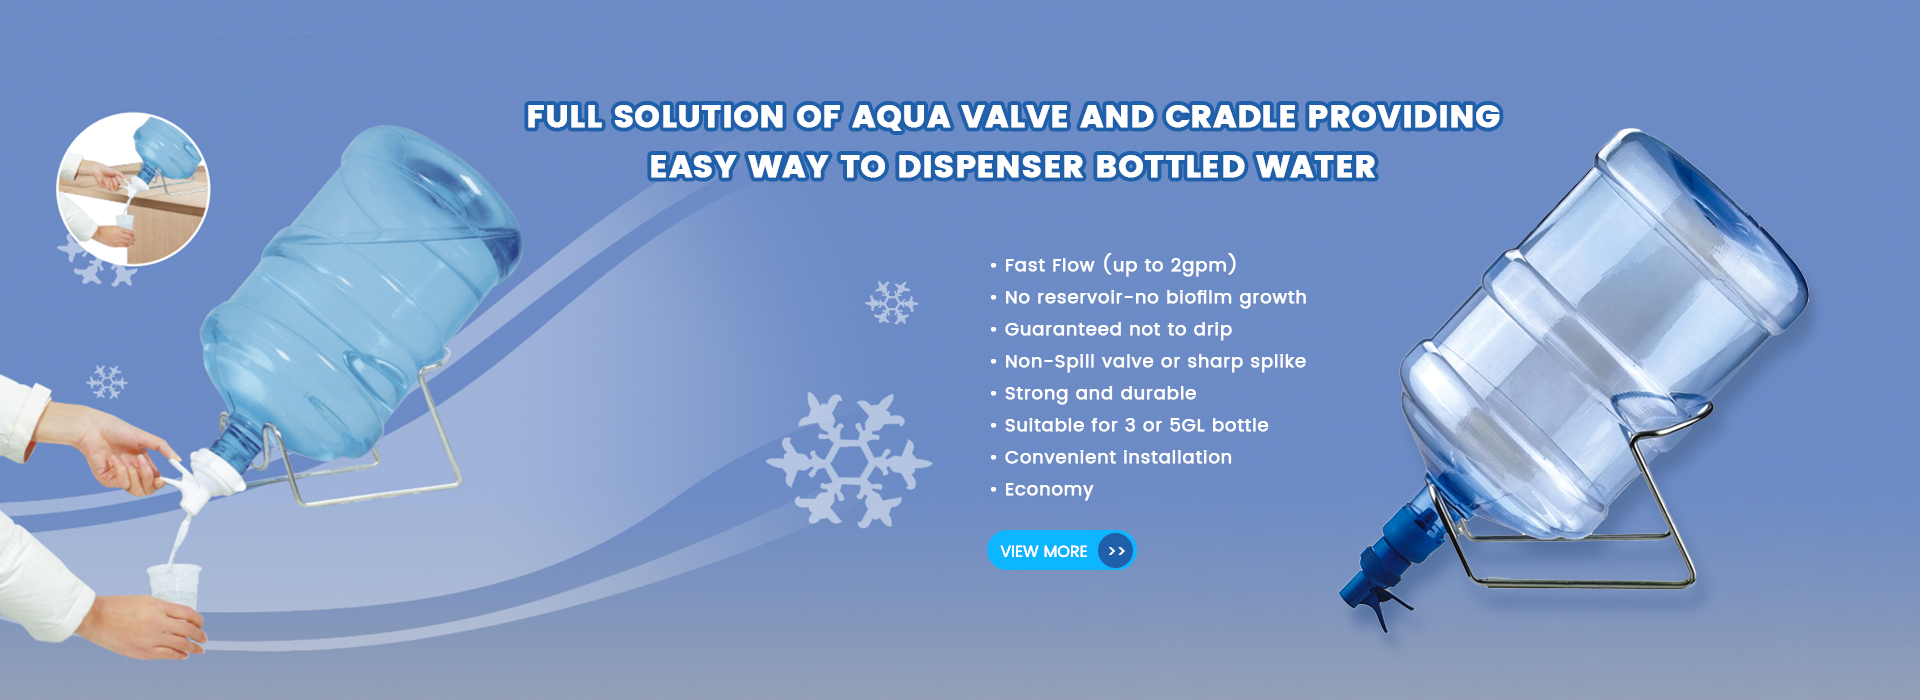 Facility water dispenser with Aqua Valve